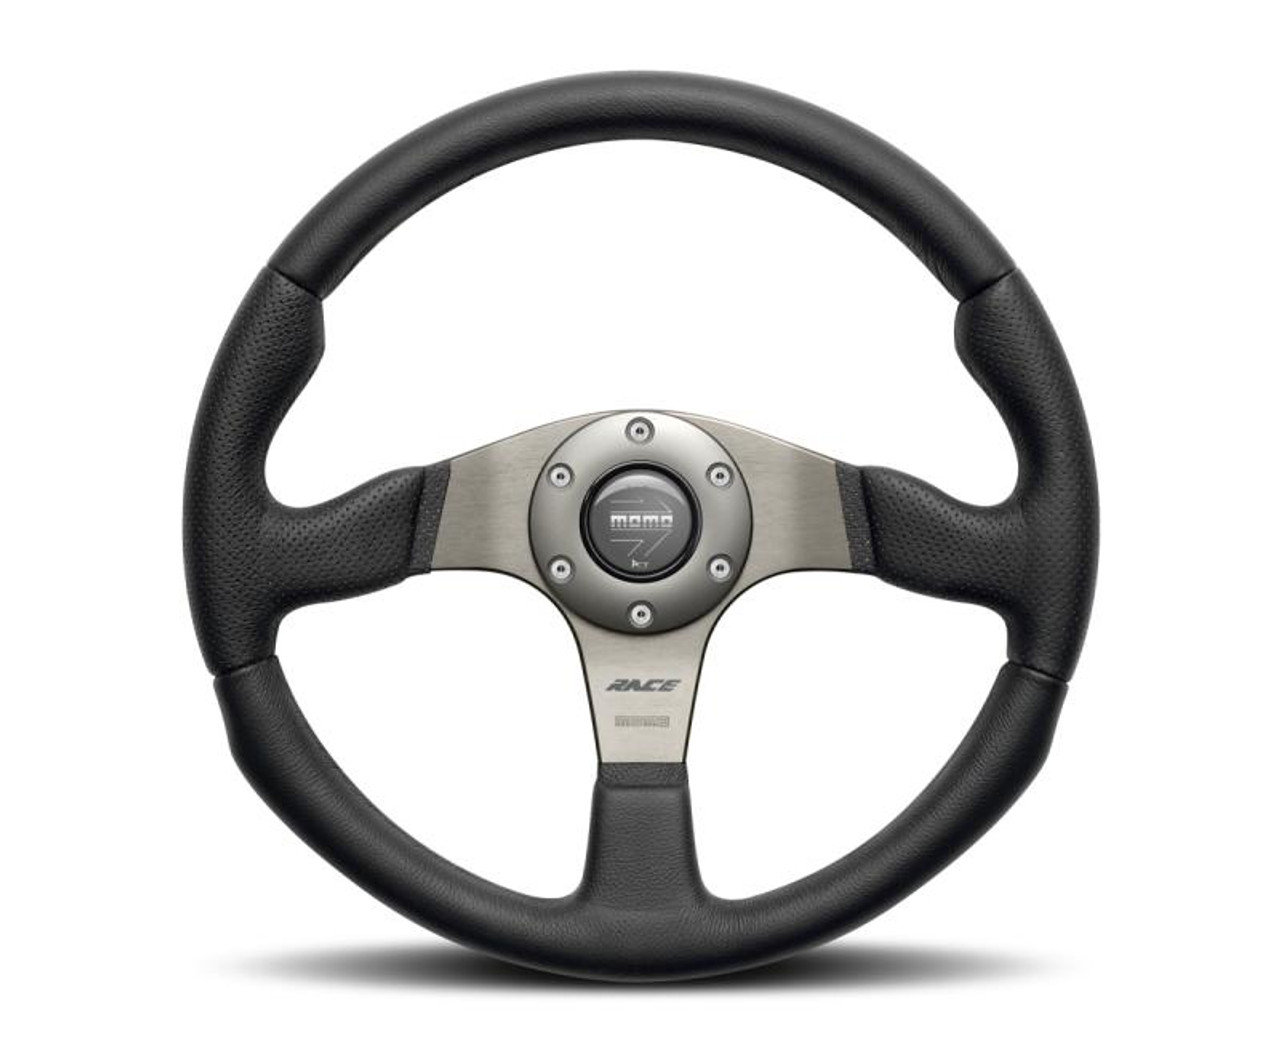 MOMO Momo Race Steering Wheel 350 mm - Black Leather/Anth Spokes - RCE35BK1B 